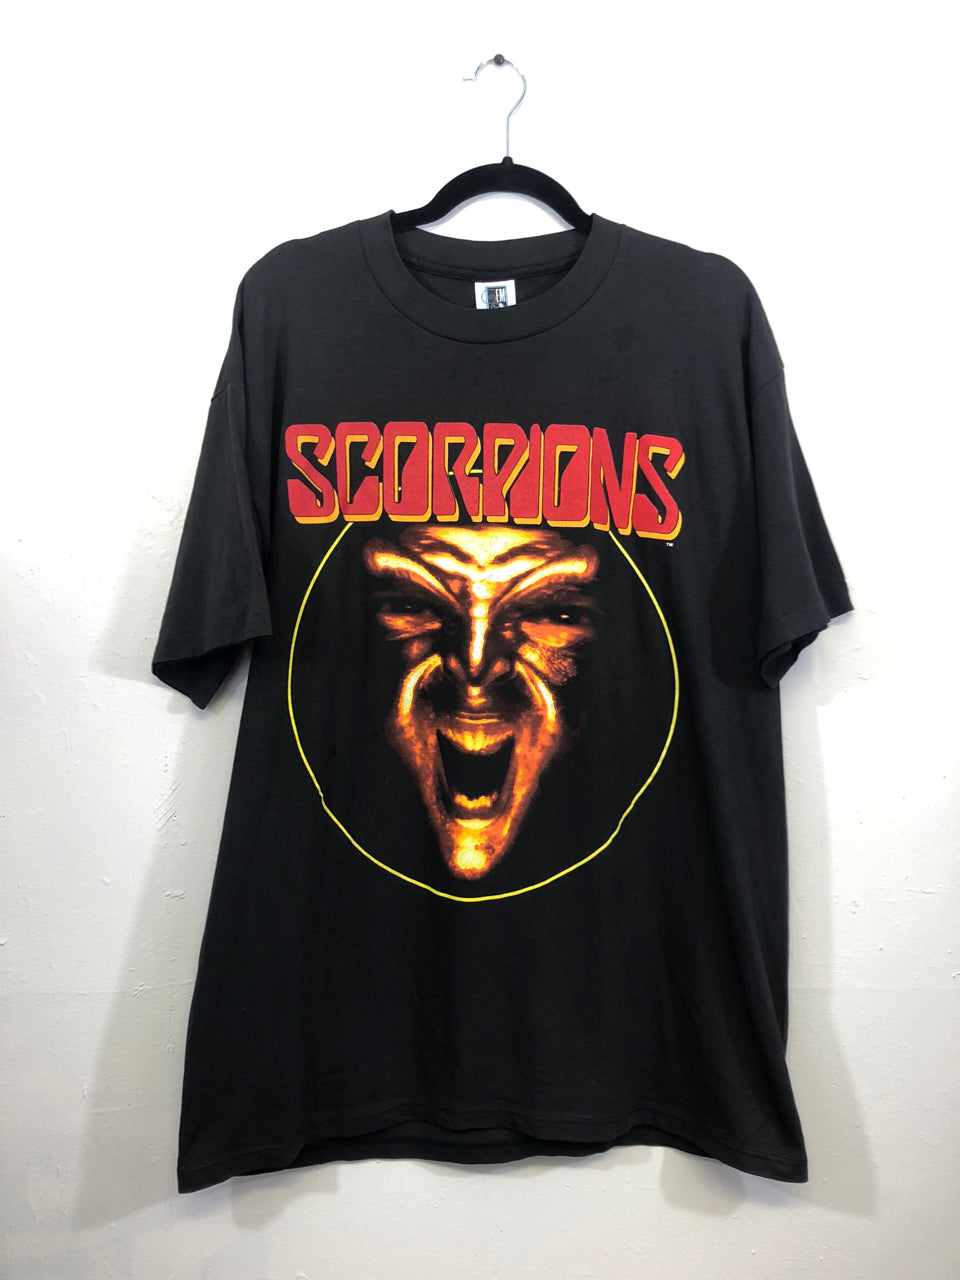 Scorpions Face the Heat 1994 Tour T-Shirt